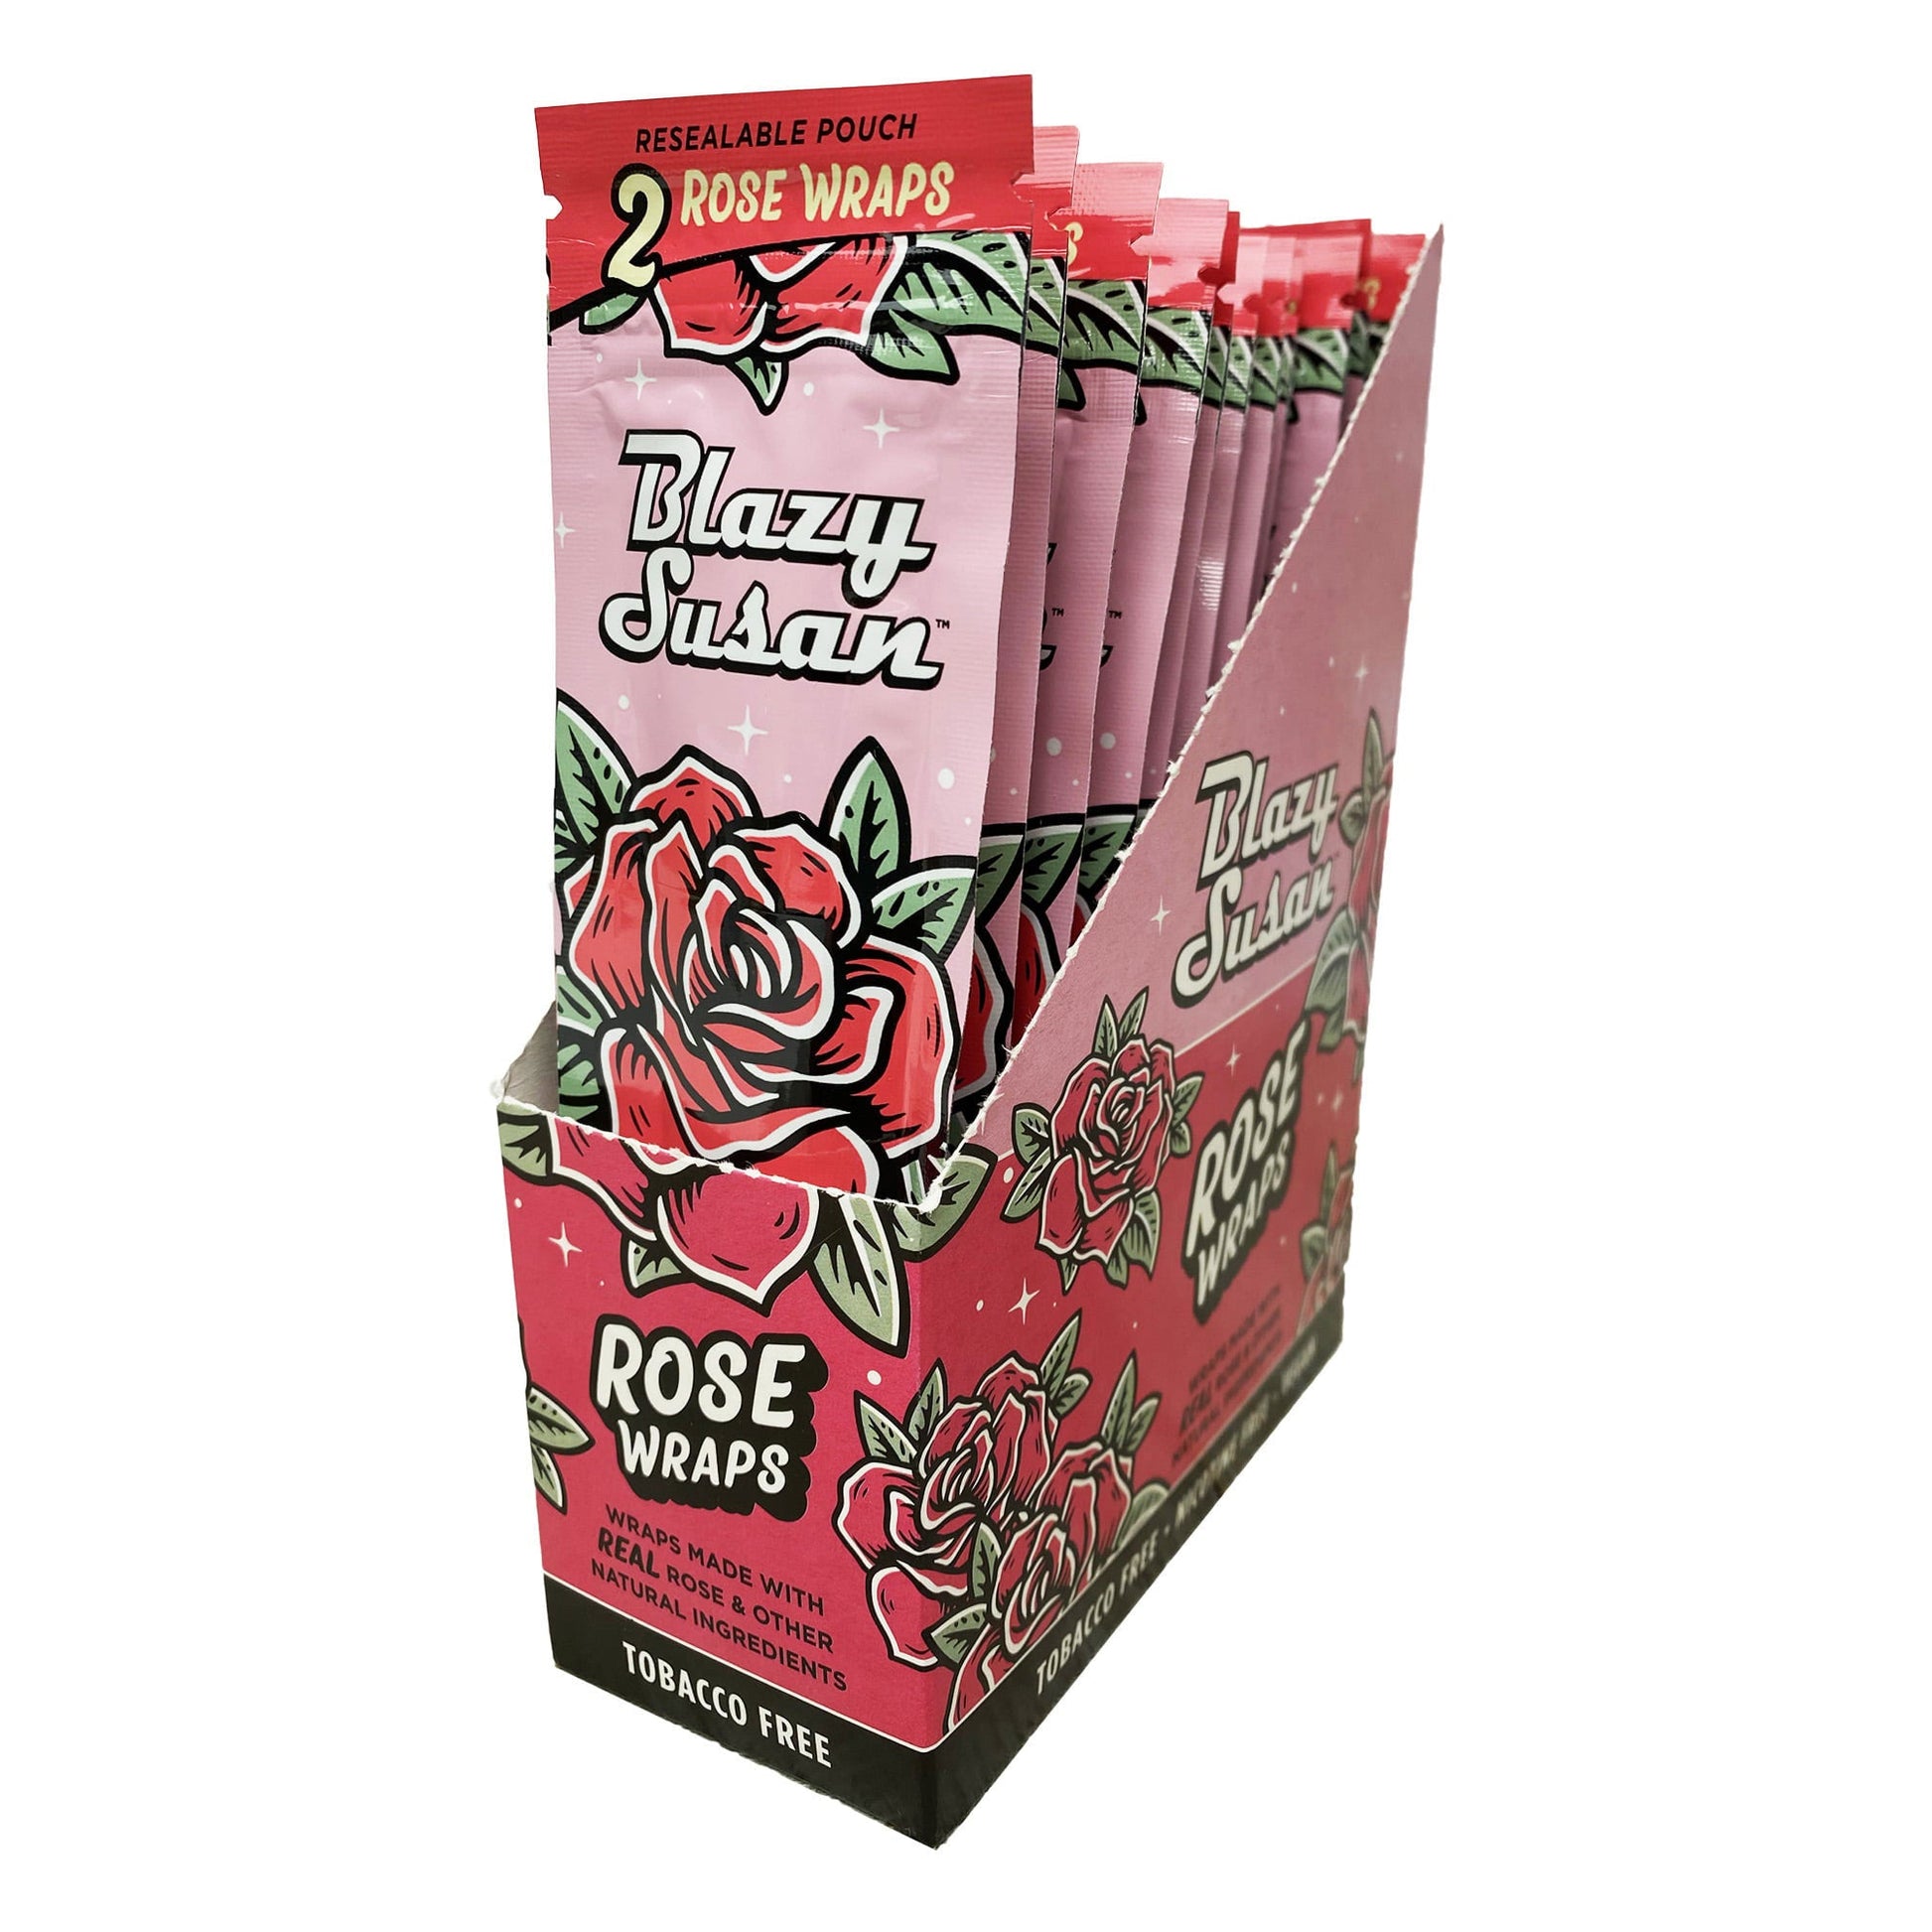 Blazy Susan - Rose Wraps 2pk (25ct Box)